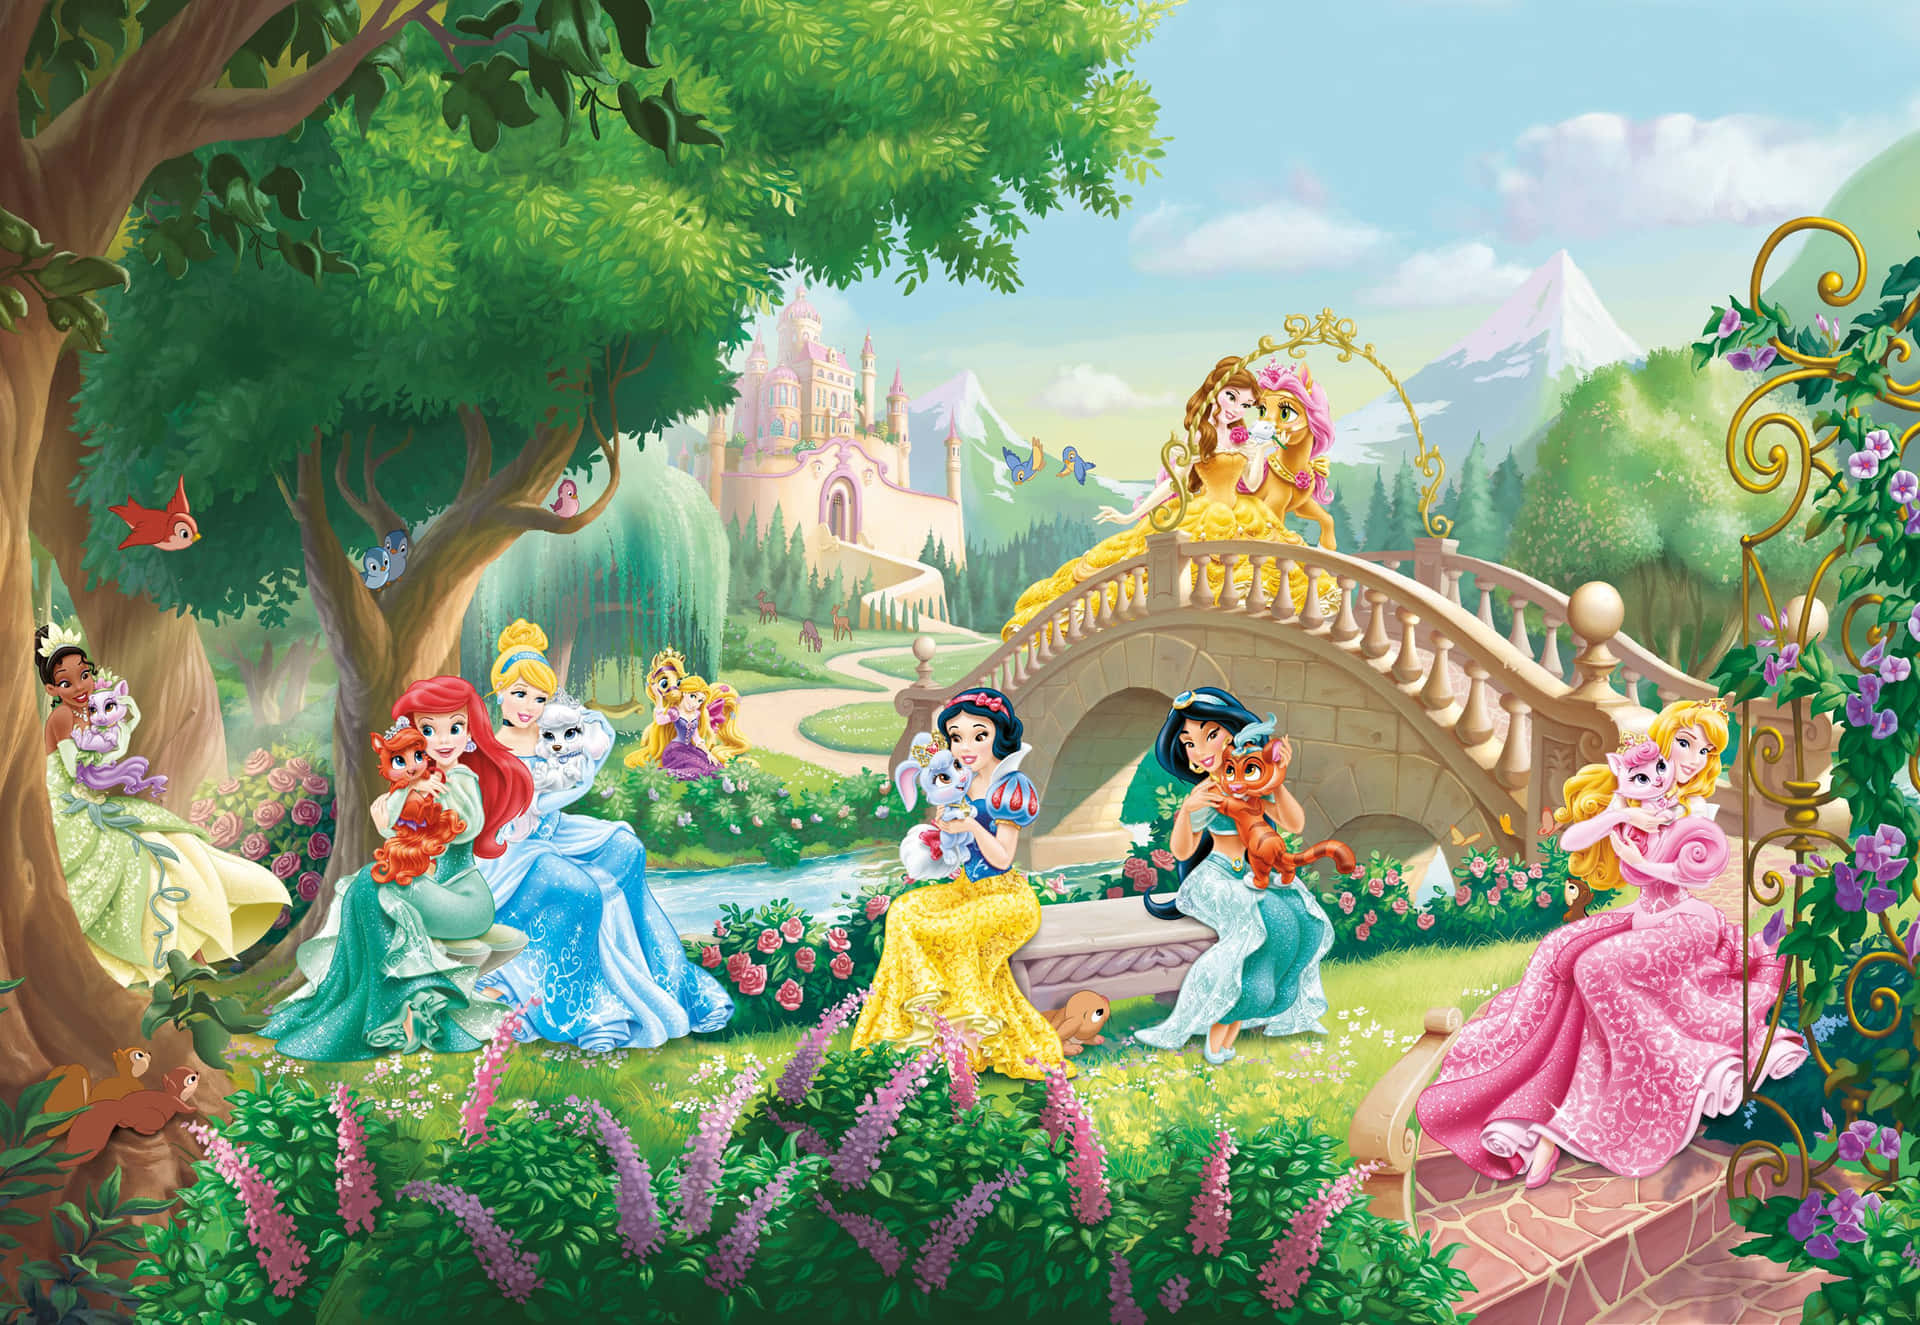 Celebrating the legacy of Disney Princesses